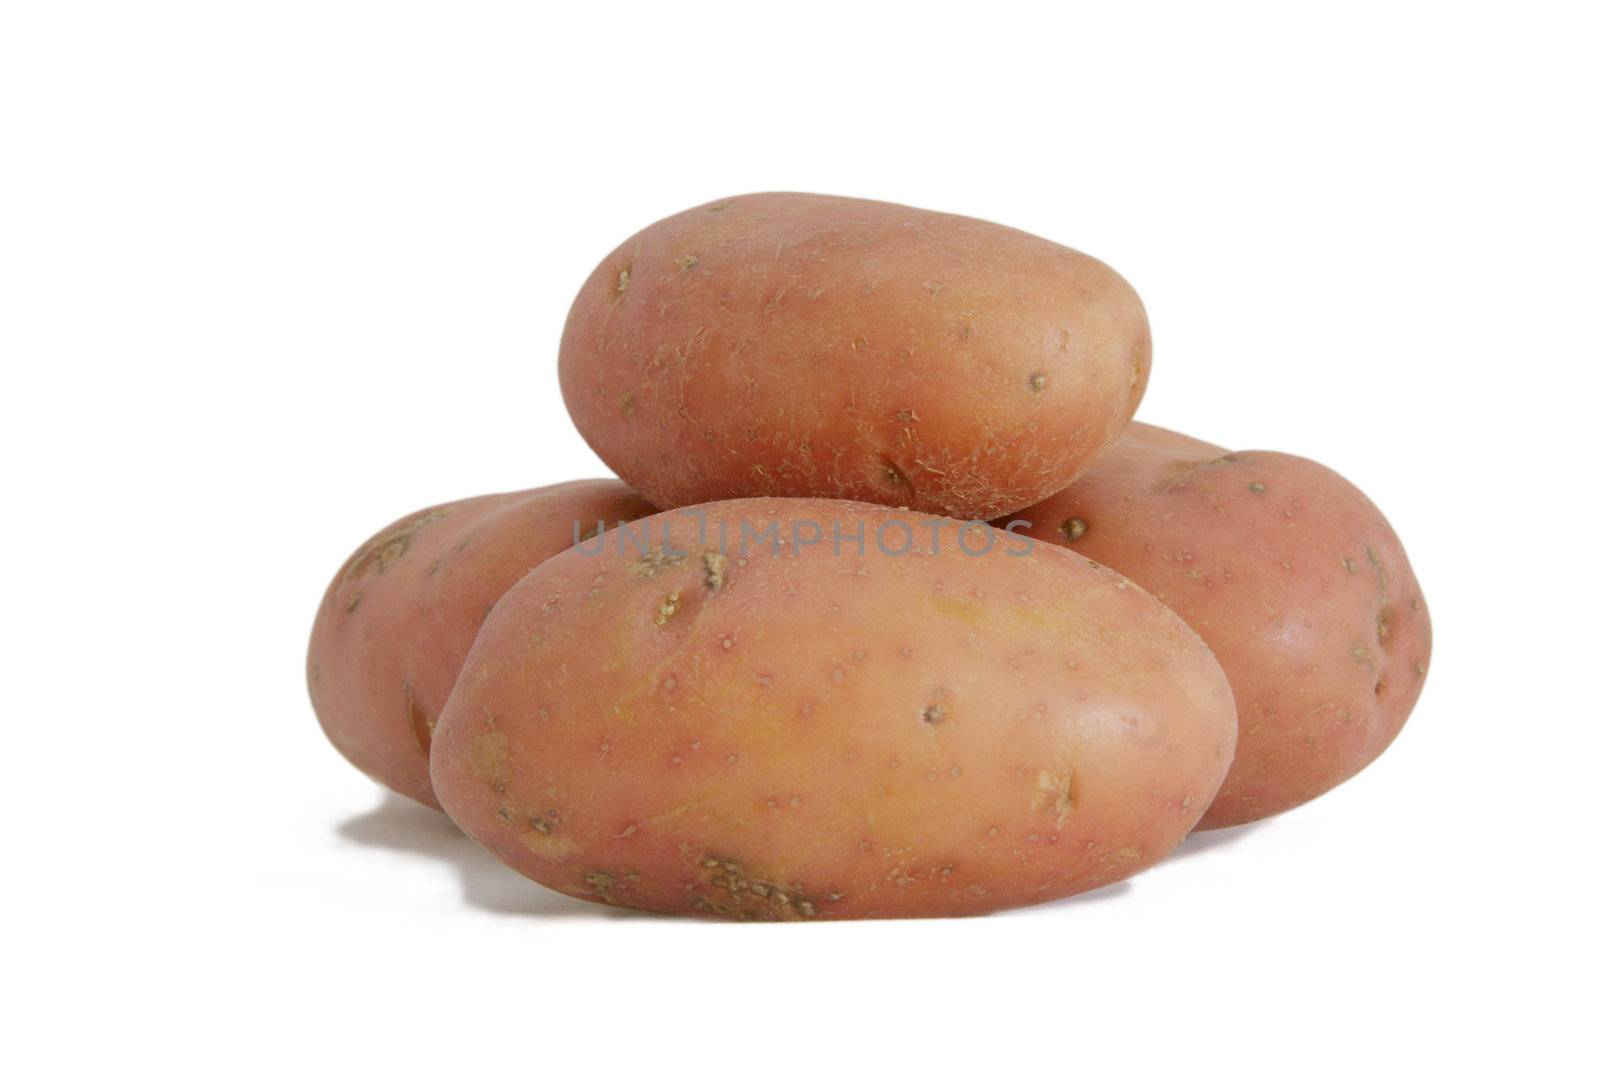 desiree potatoes by leafy